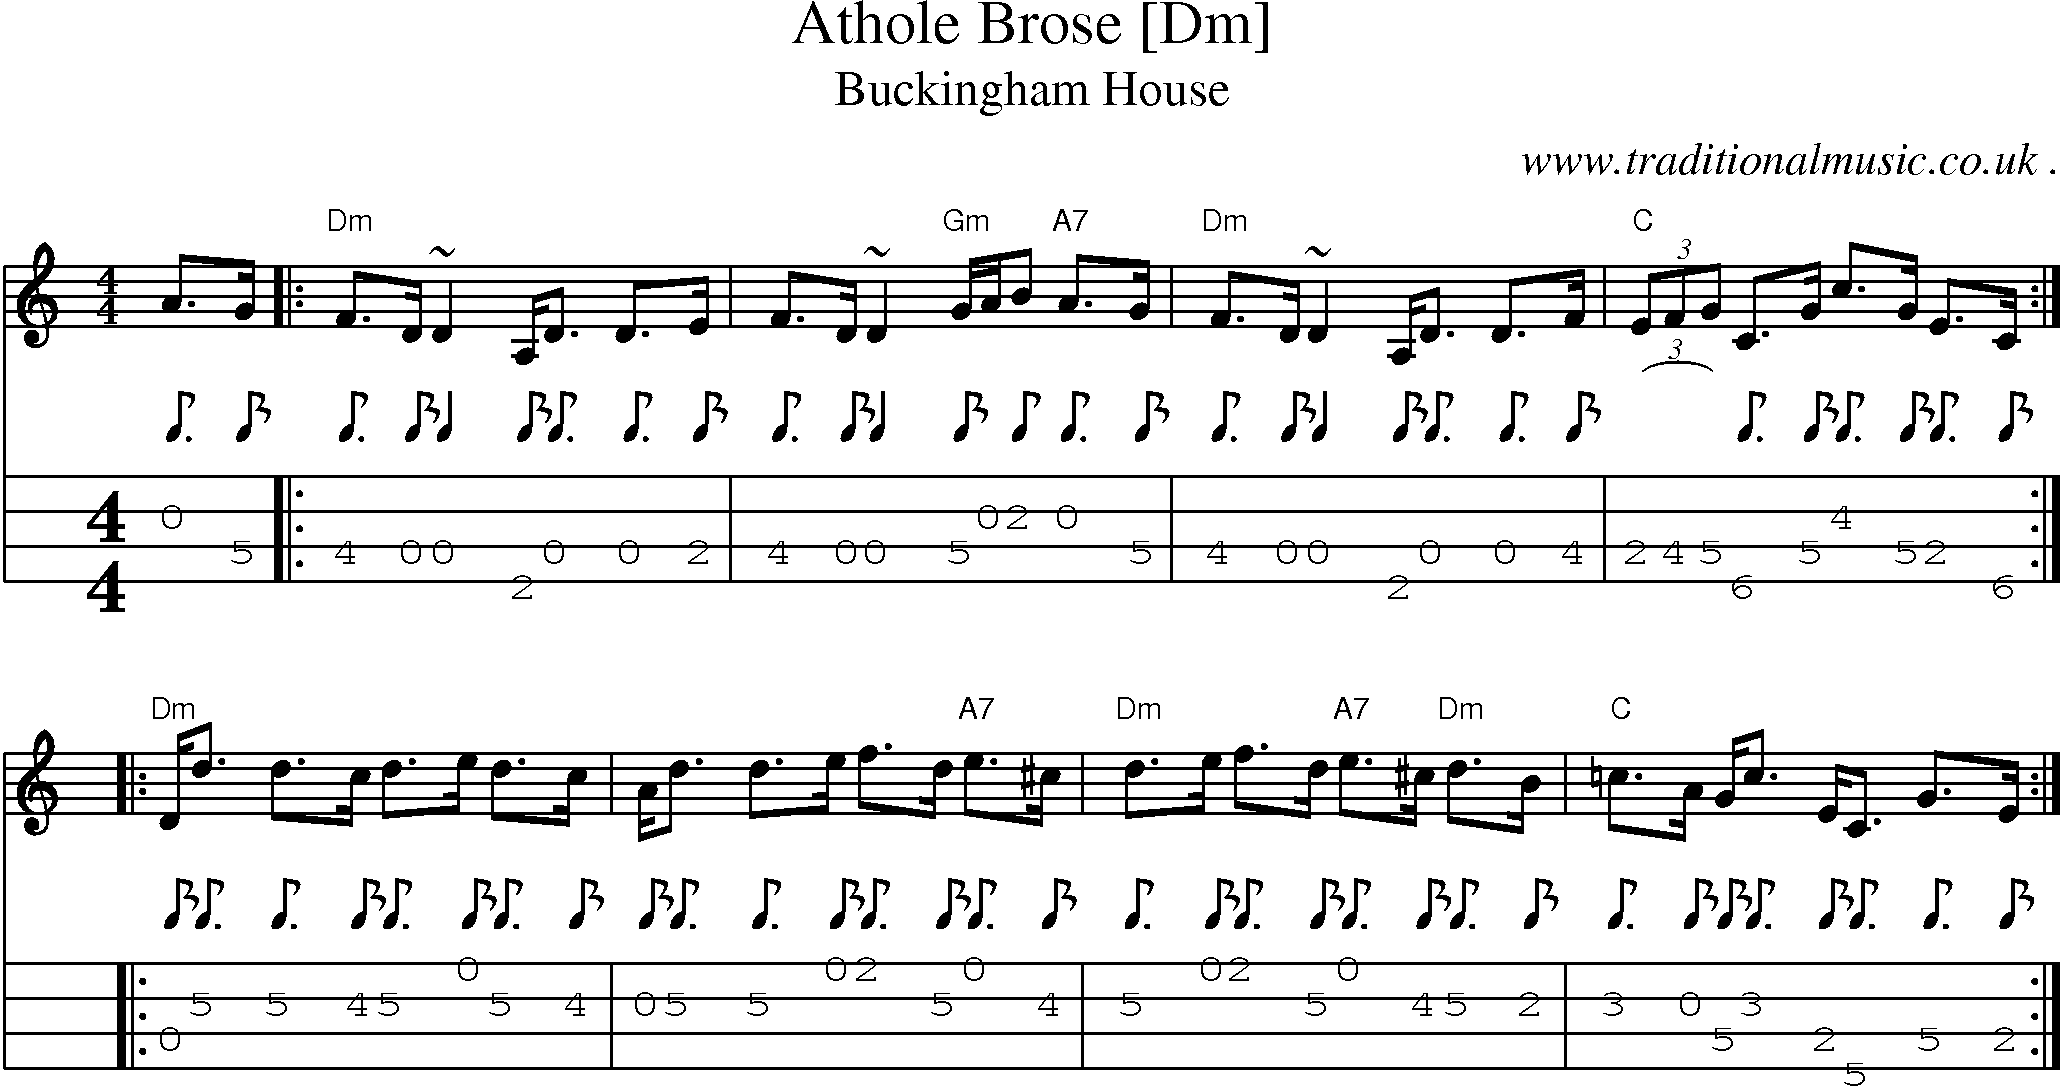 Sheet-music  score, Chords and Mandolin Tabs for Athole Brose [dm]